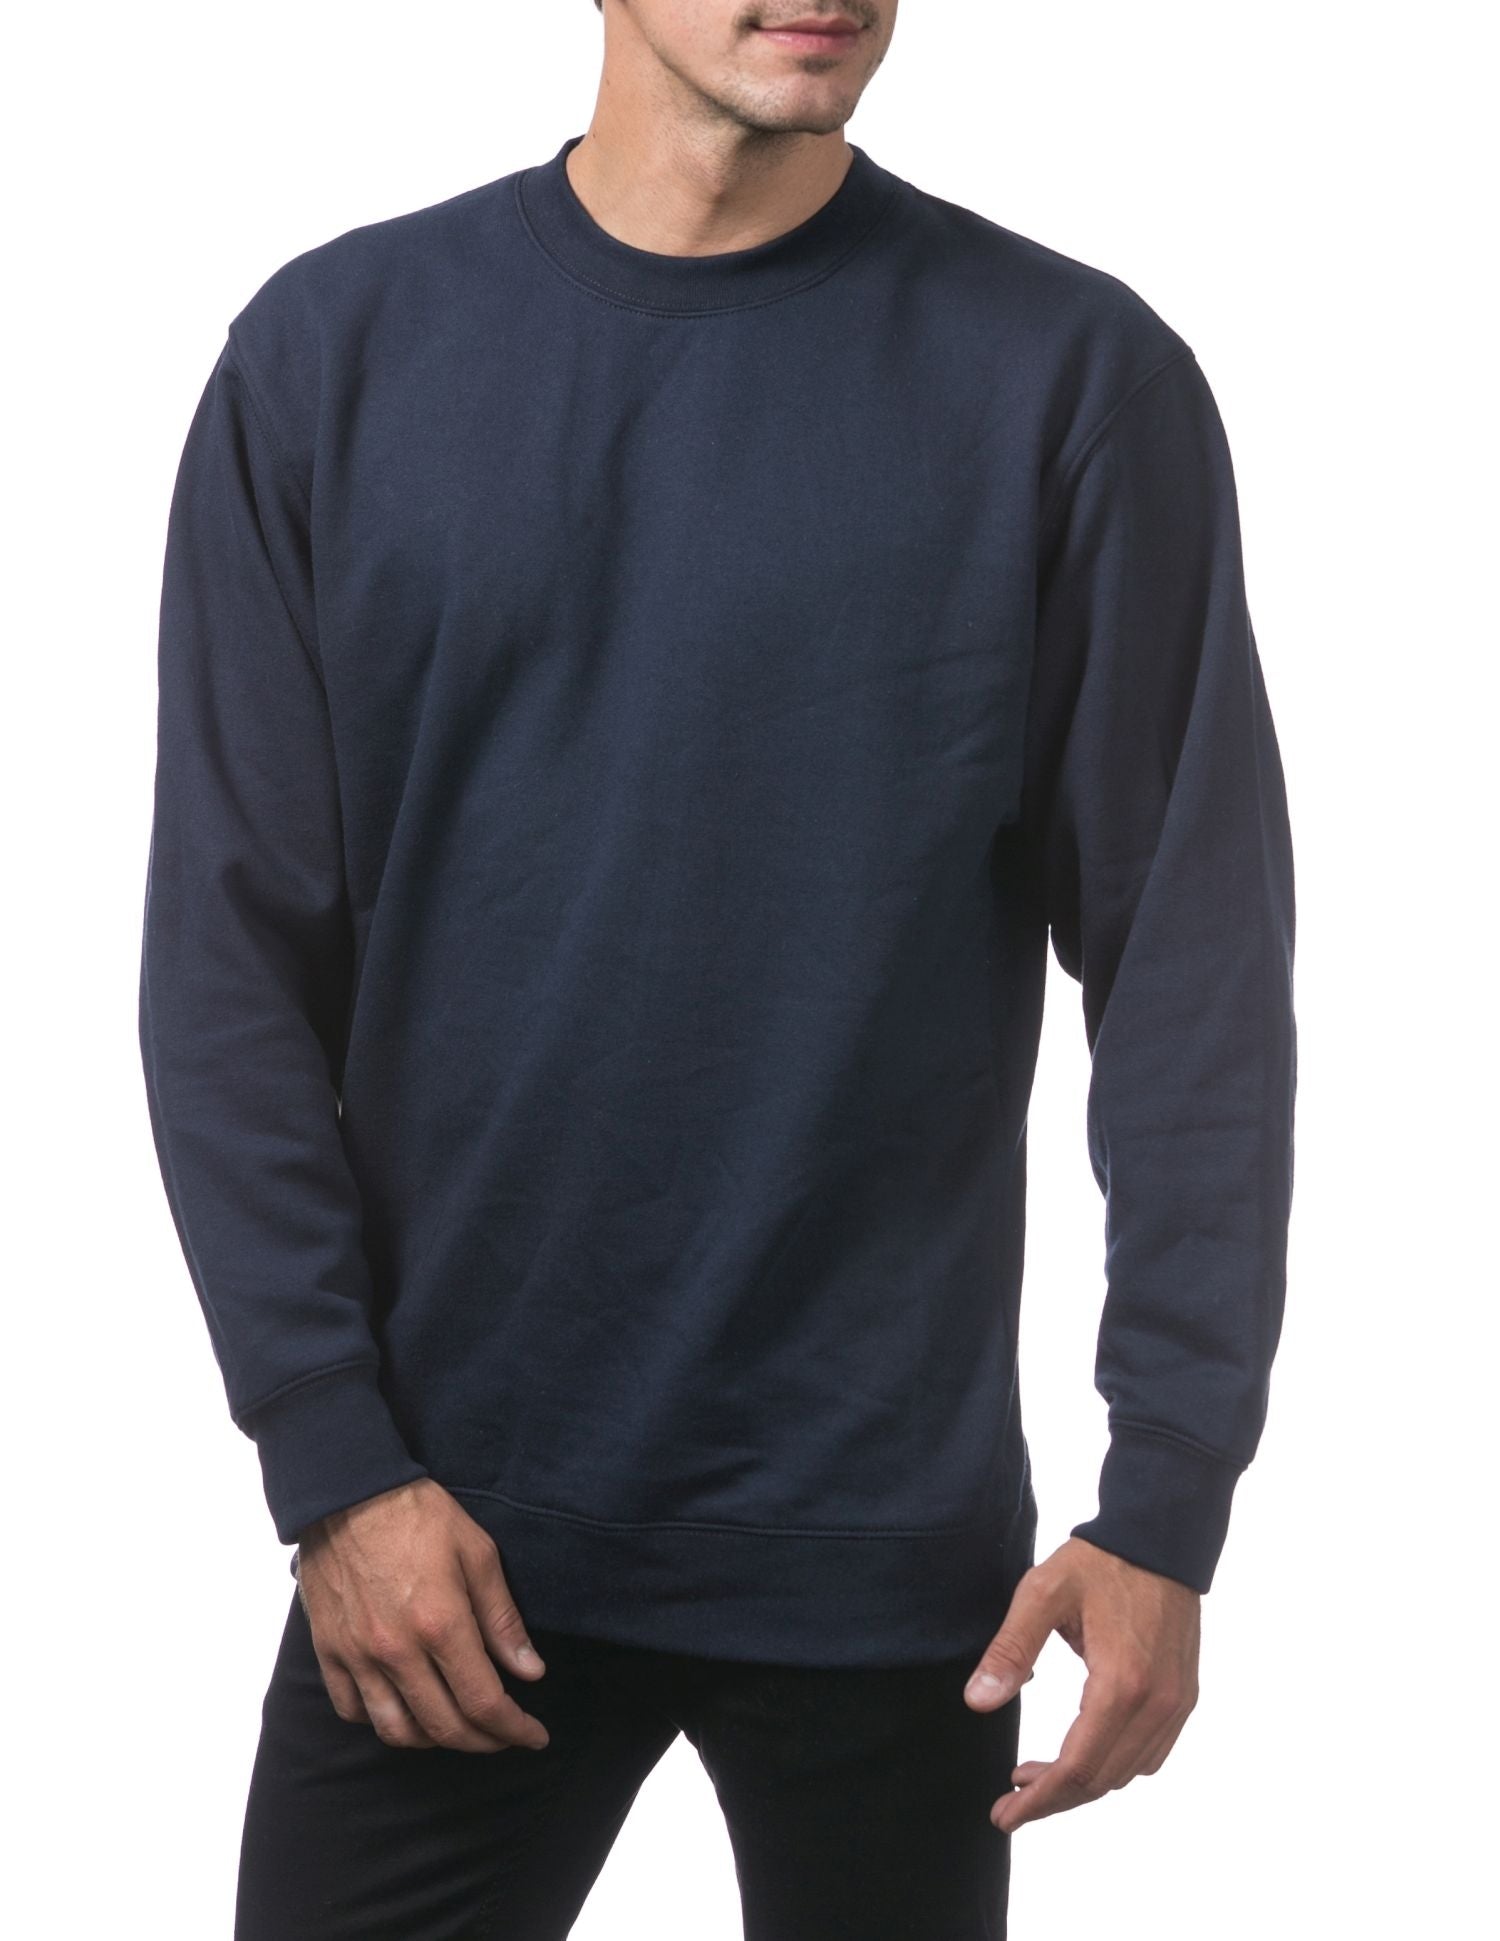 Pro Club Men's Comfort Crew Neck Fleece Pullover Sweater - Navy - Large - Pro-Distributing